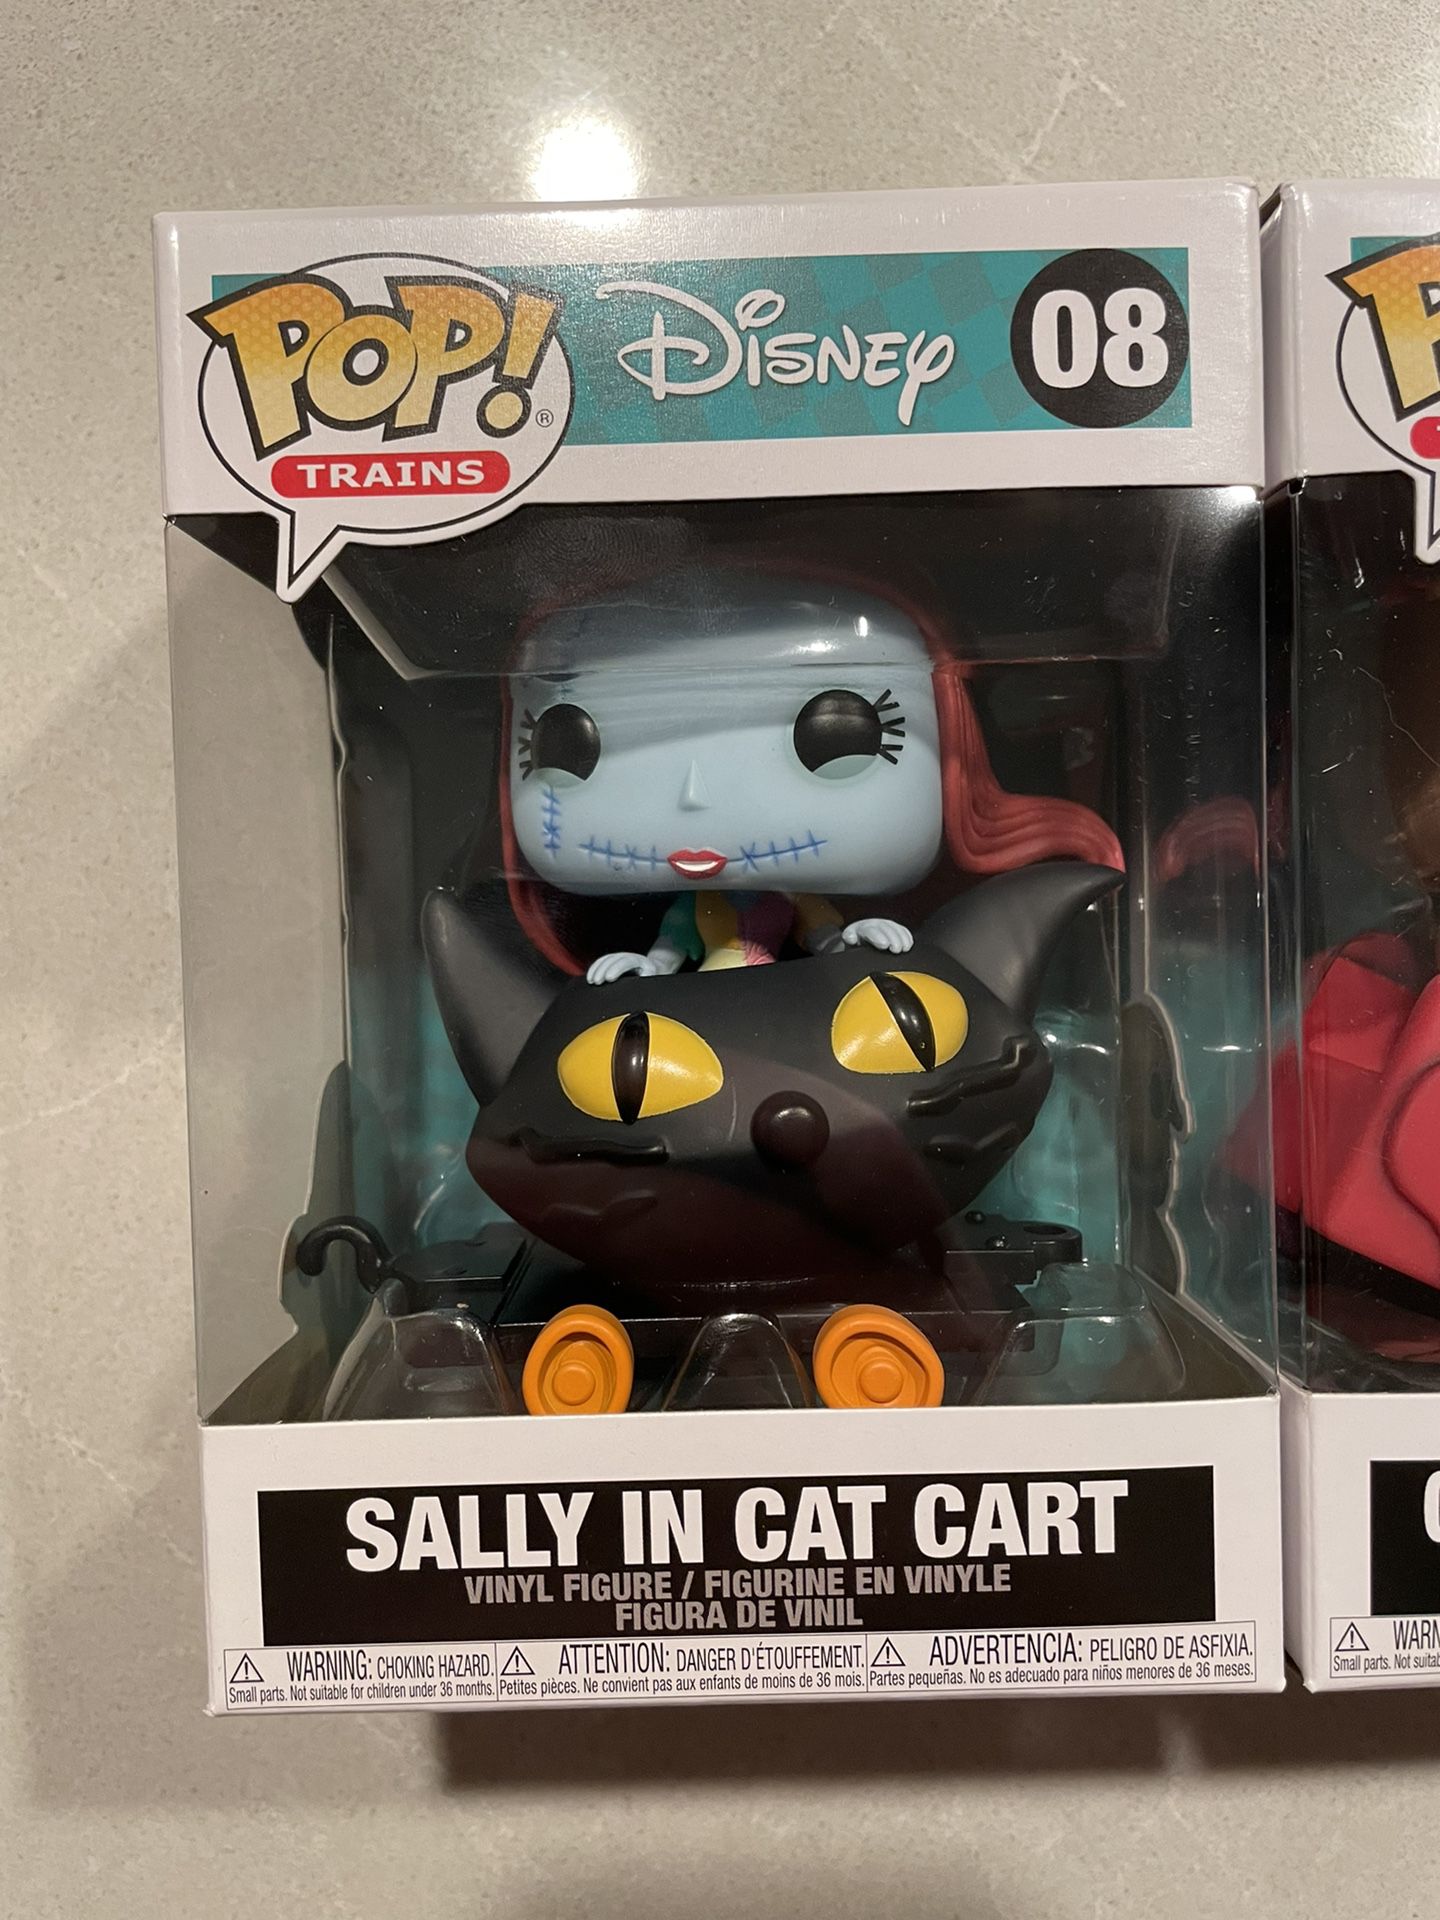 Sally Cat Zero Duck & Oogie Boogie Dice Cart Funko Pop Set *MINT* Shop Exclusive Disney Nightmare Before Christmas Train 08 09 10 with protector NBC